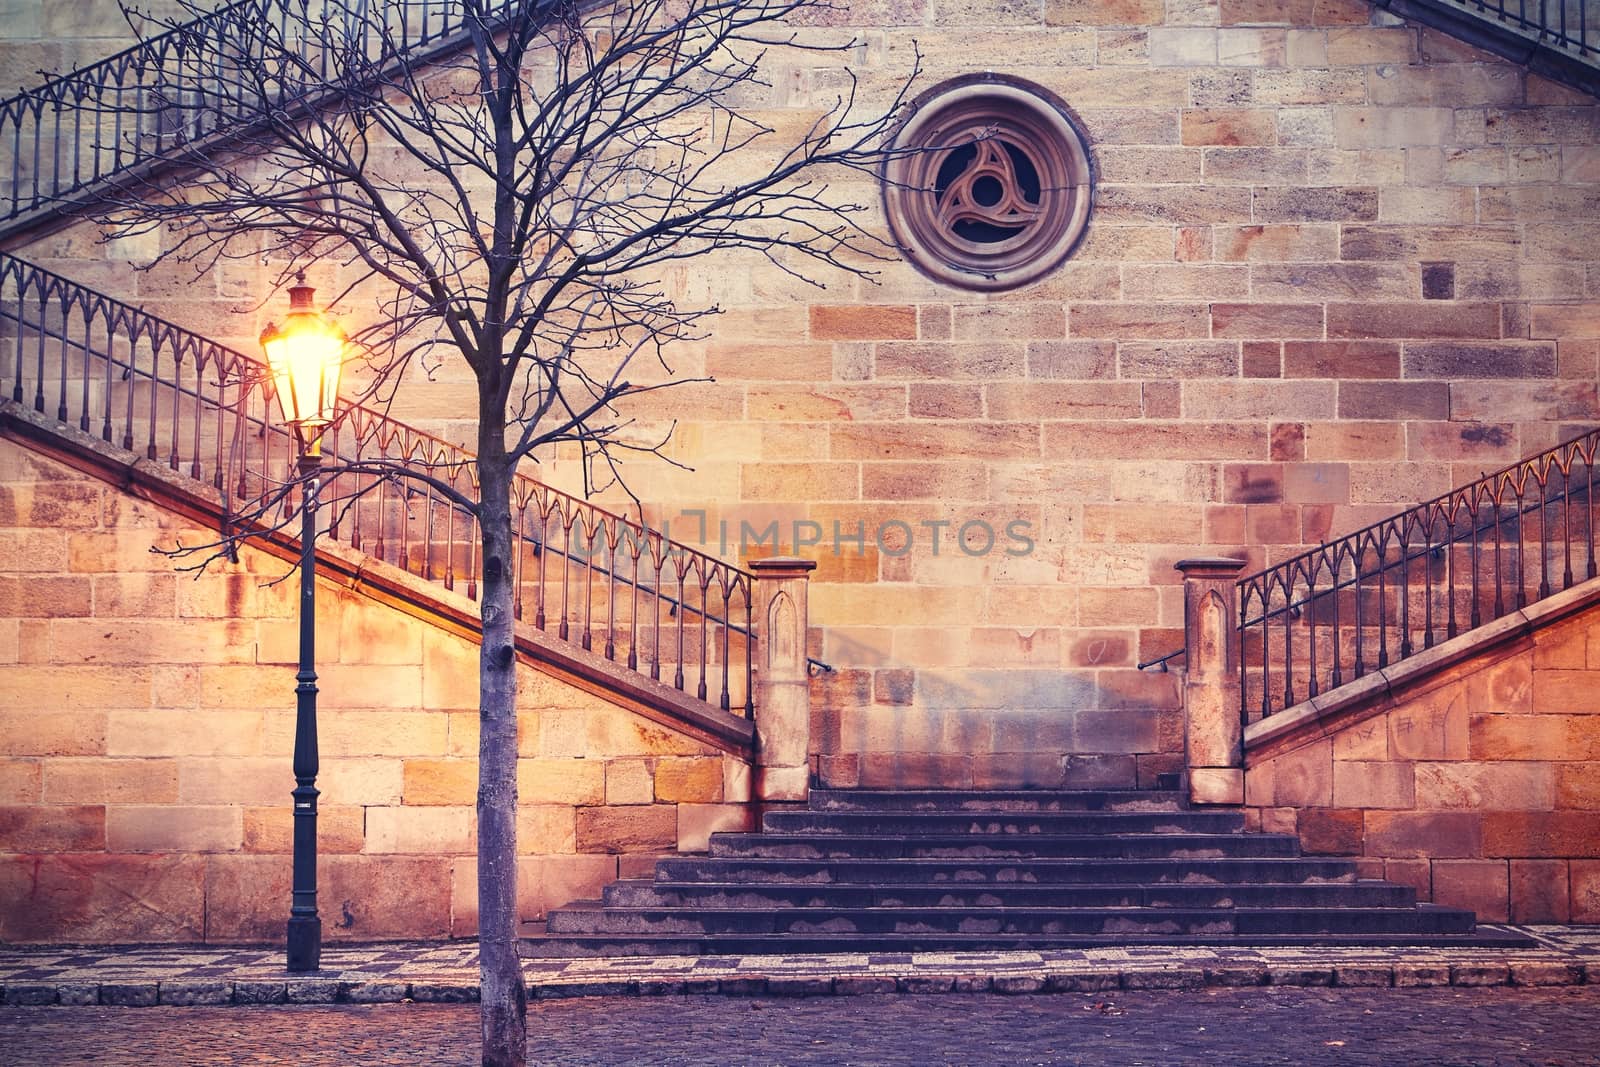 Staircase to Charles bridge in Prague - Czech Republic.